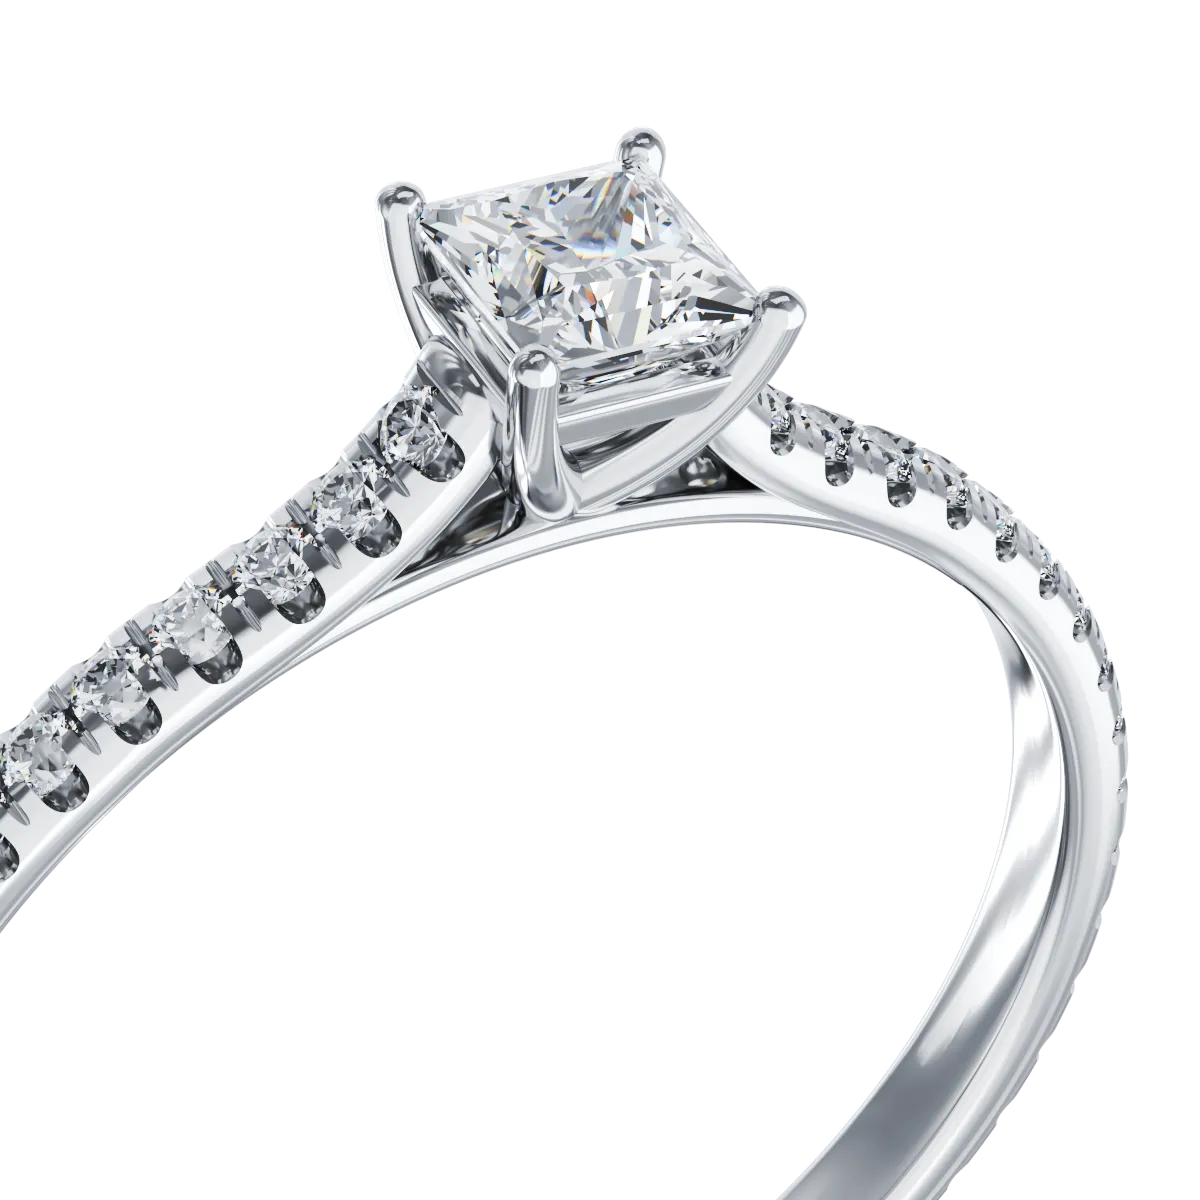 Platinum engagement ring with 0.25ct diamond and 0.15ct diamonds